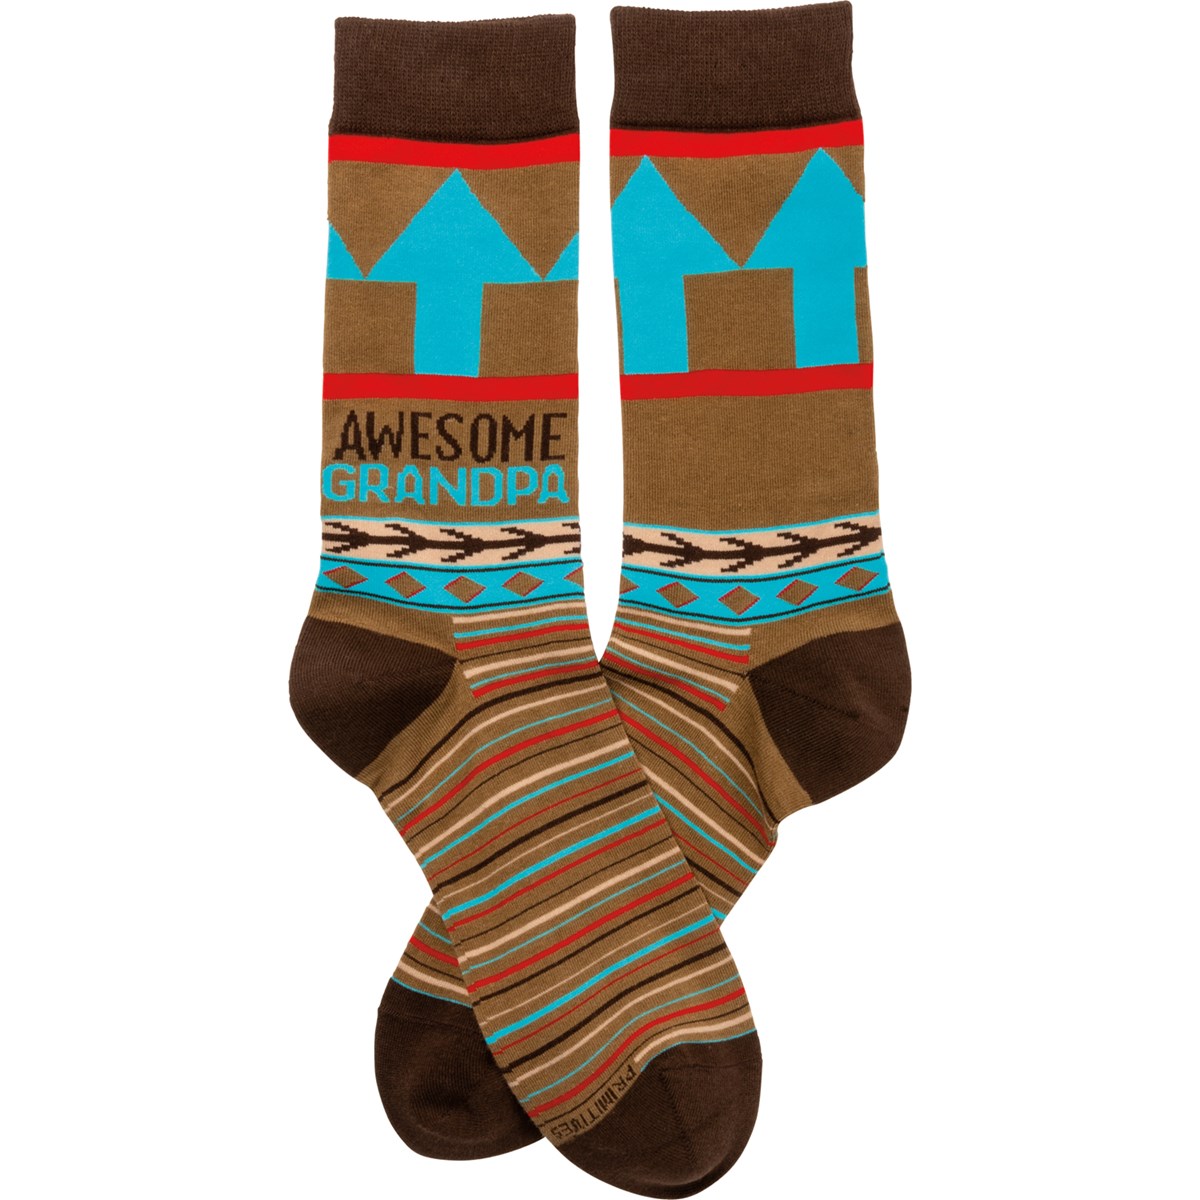 Awesome Grandpa Socks - Cotton, Nylon, Spandex